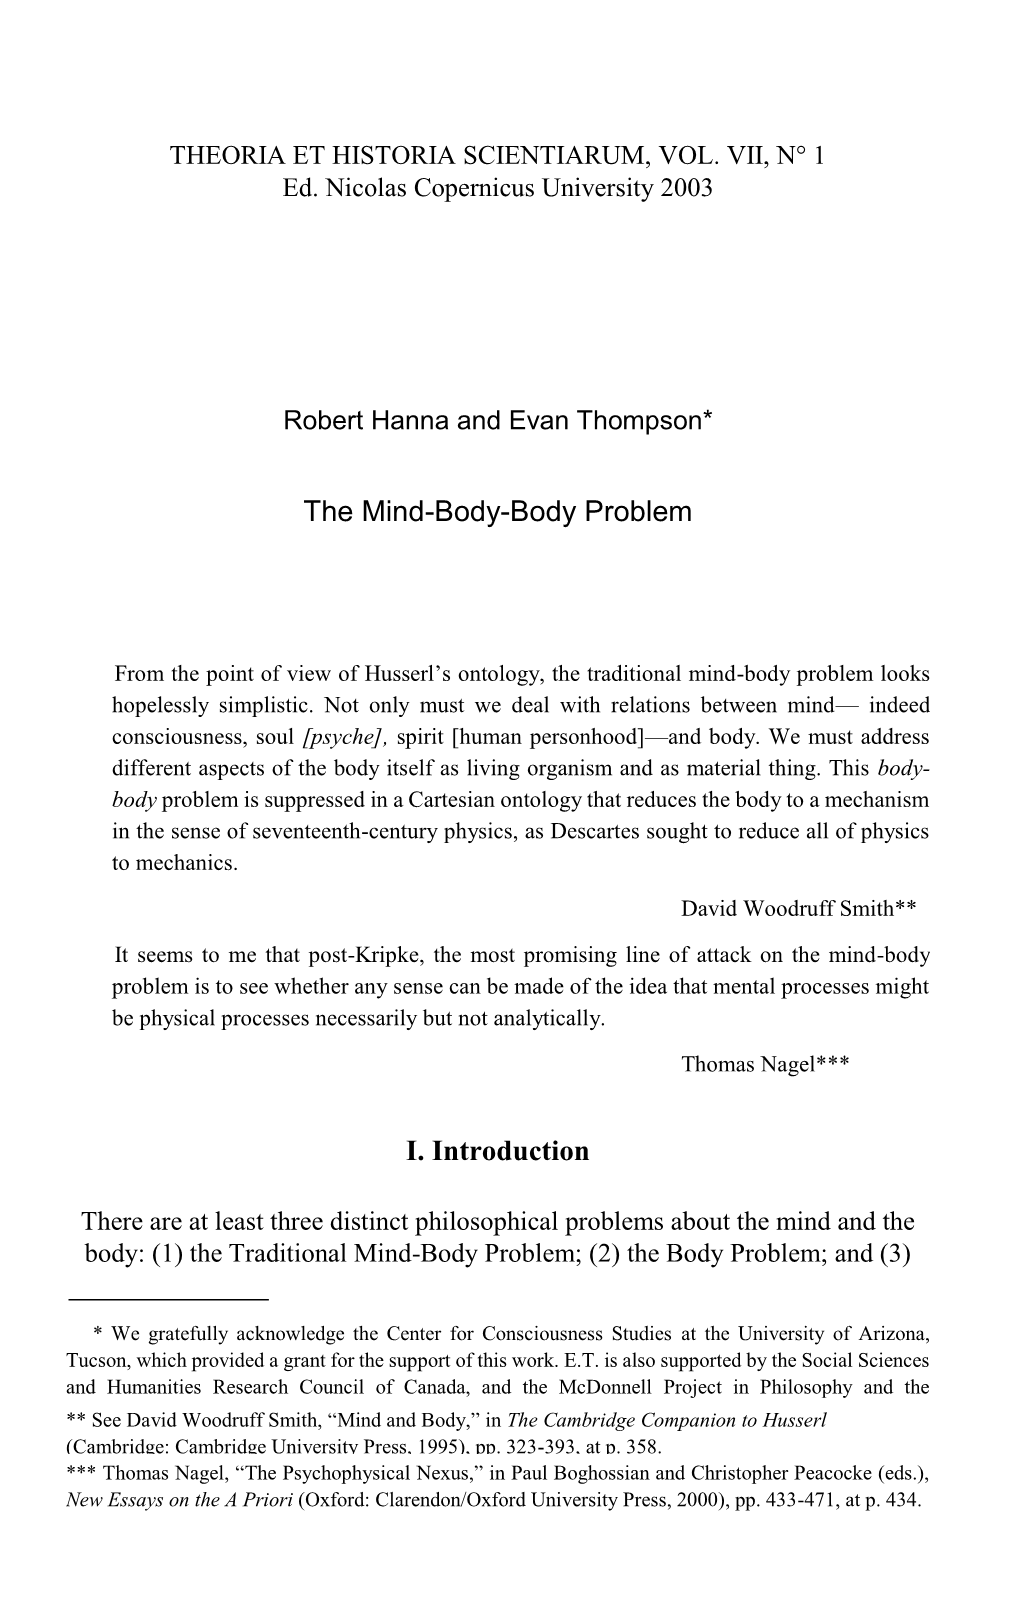 The Mind-Body-Body Problem I. Introduction